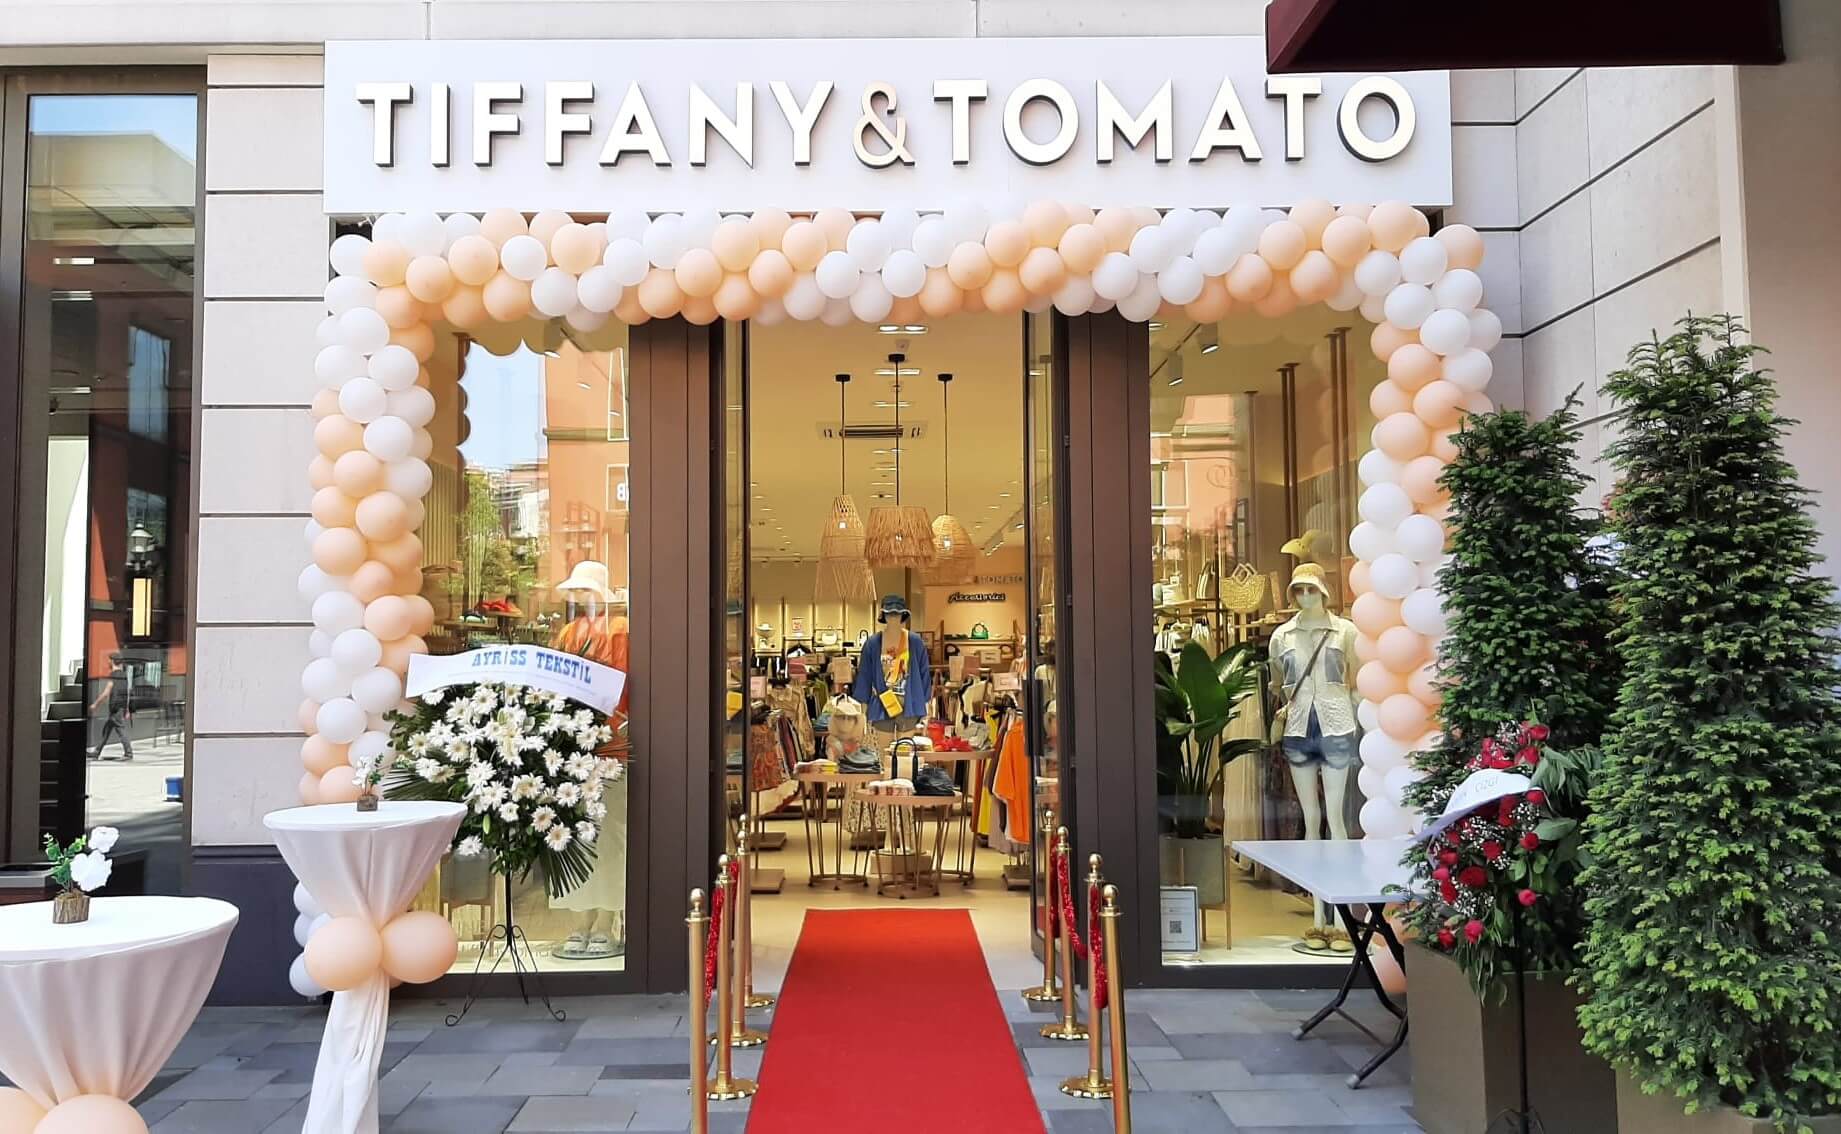 Tiffany&Tomato is opened at Piyalepaşa Çarşı Strip Mall.